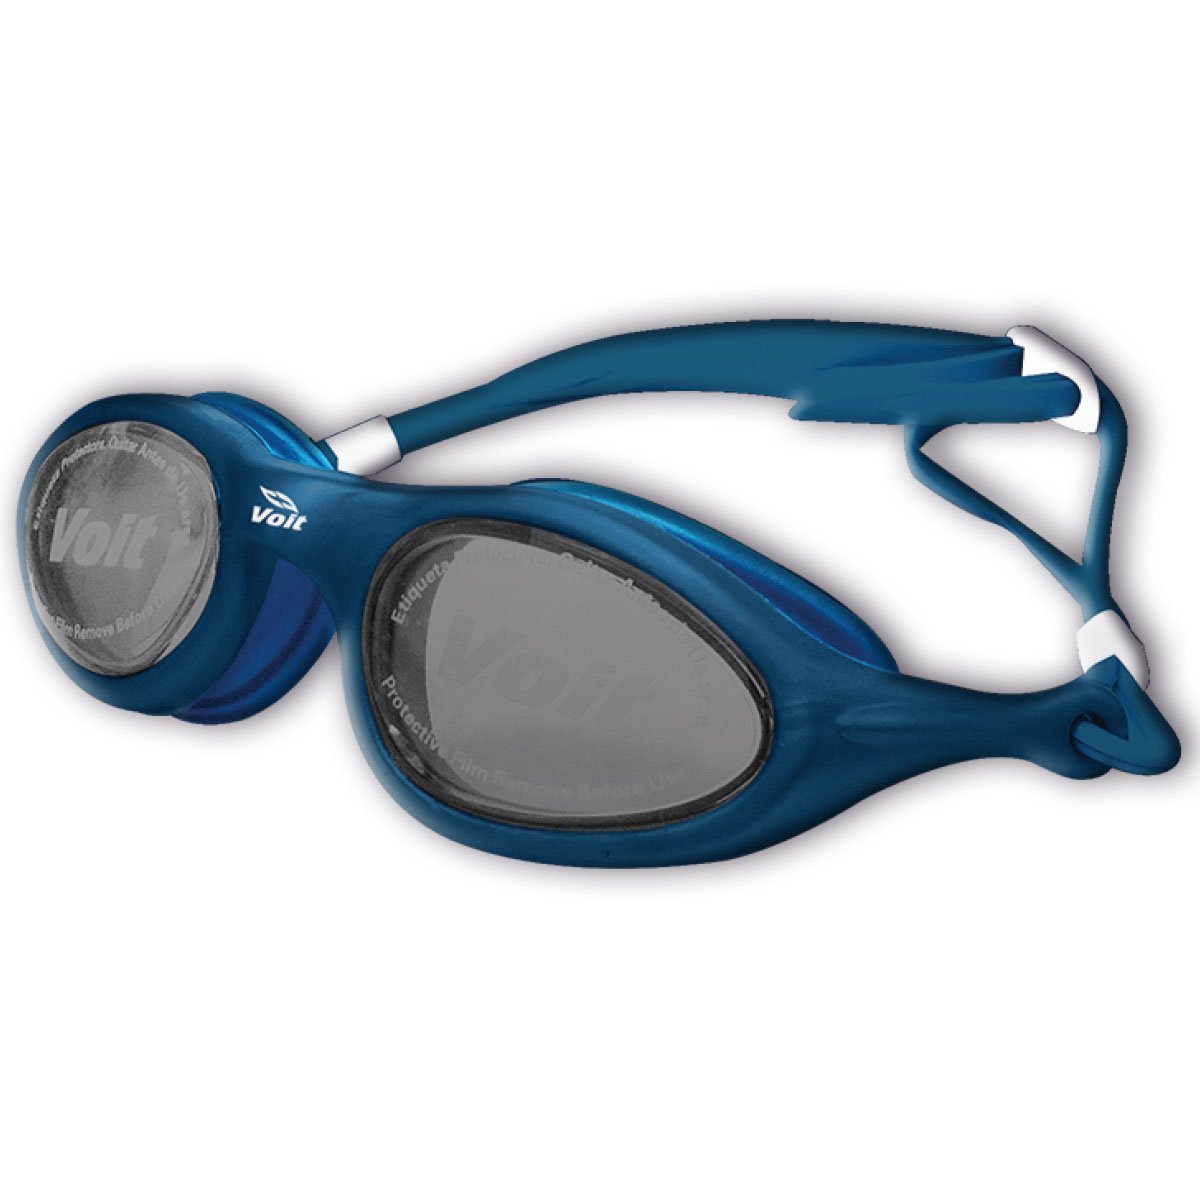 Goggles Azules Swift Voit